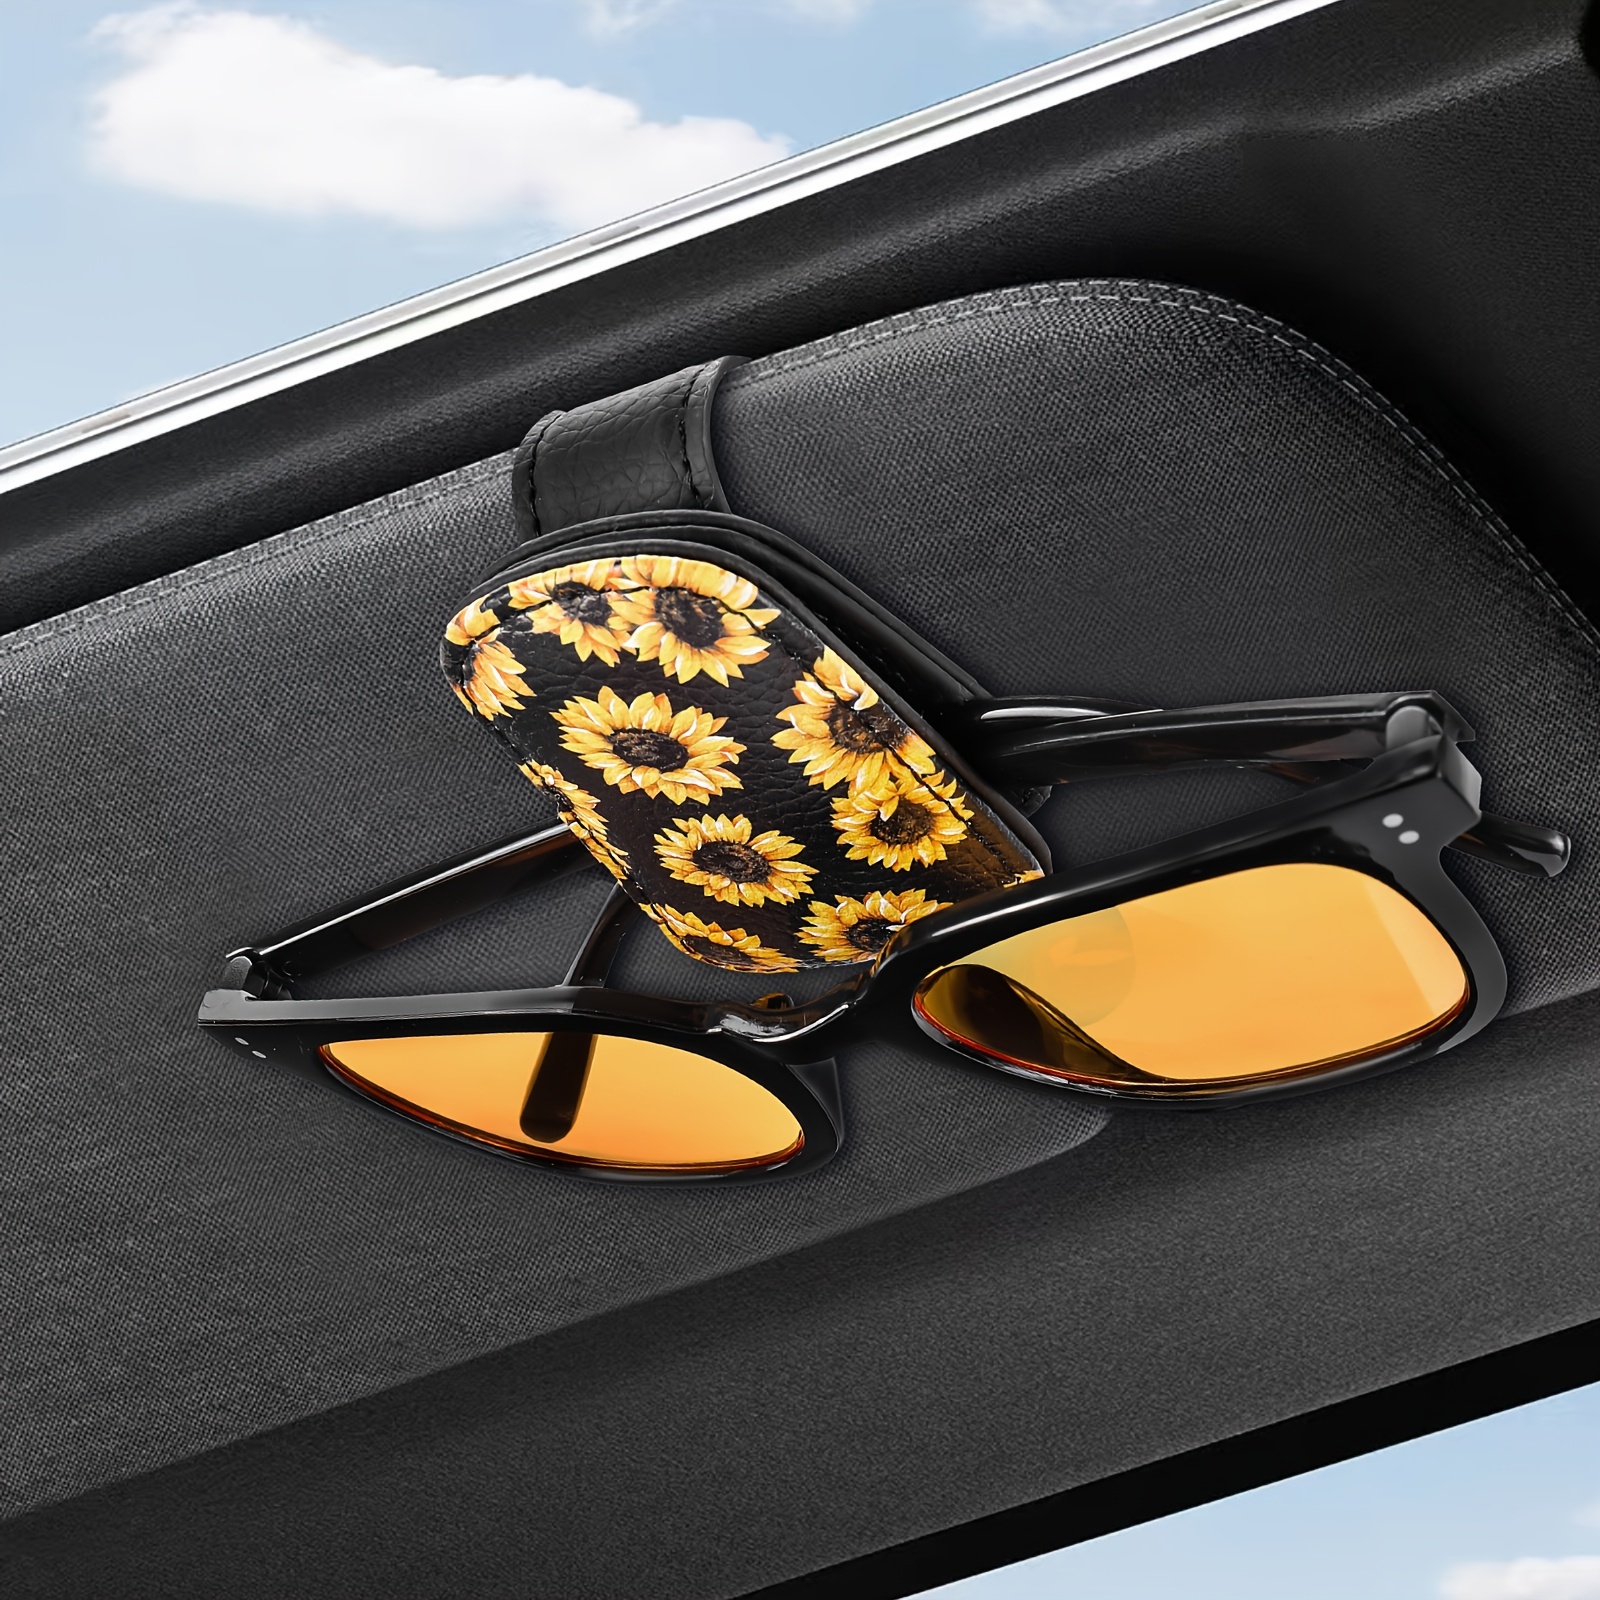 

1pc Sunflower Pattern Sunglasses Holders For Car, Magnetic Faux Leather Sunglasses Clip For Car Sun Visor, Car Interior Sun Visor Accessories